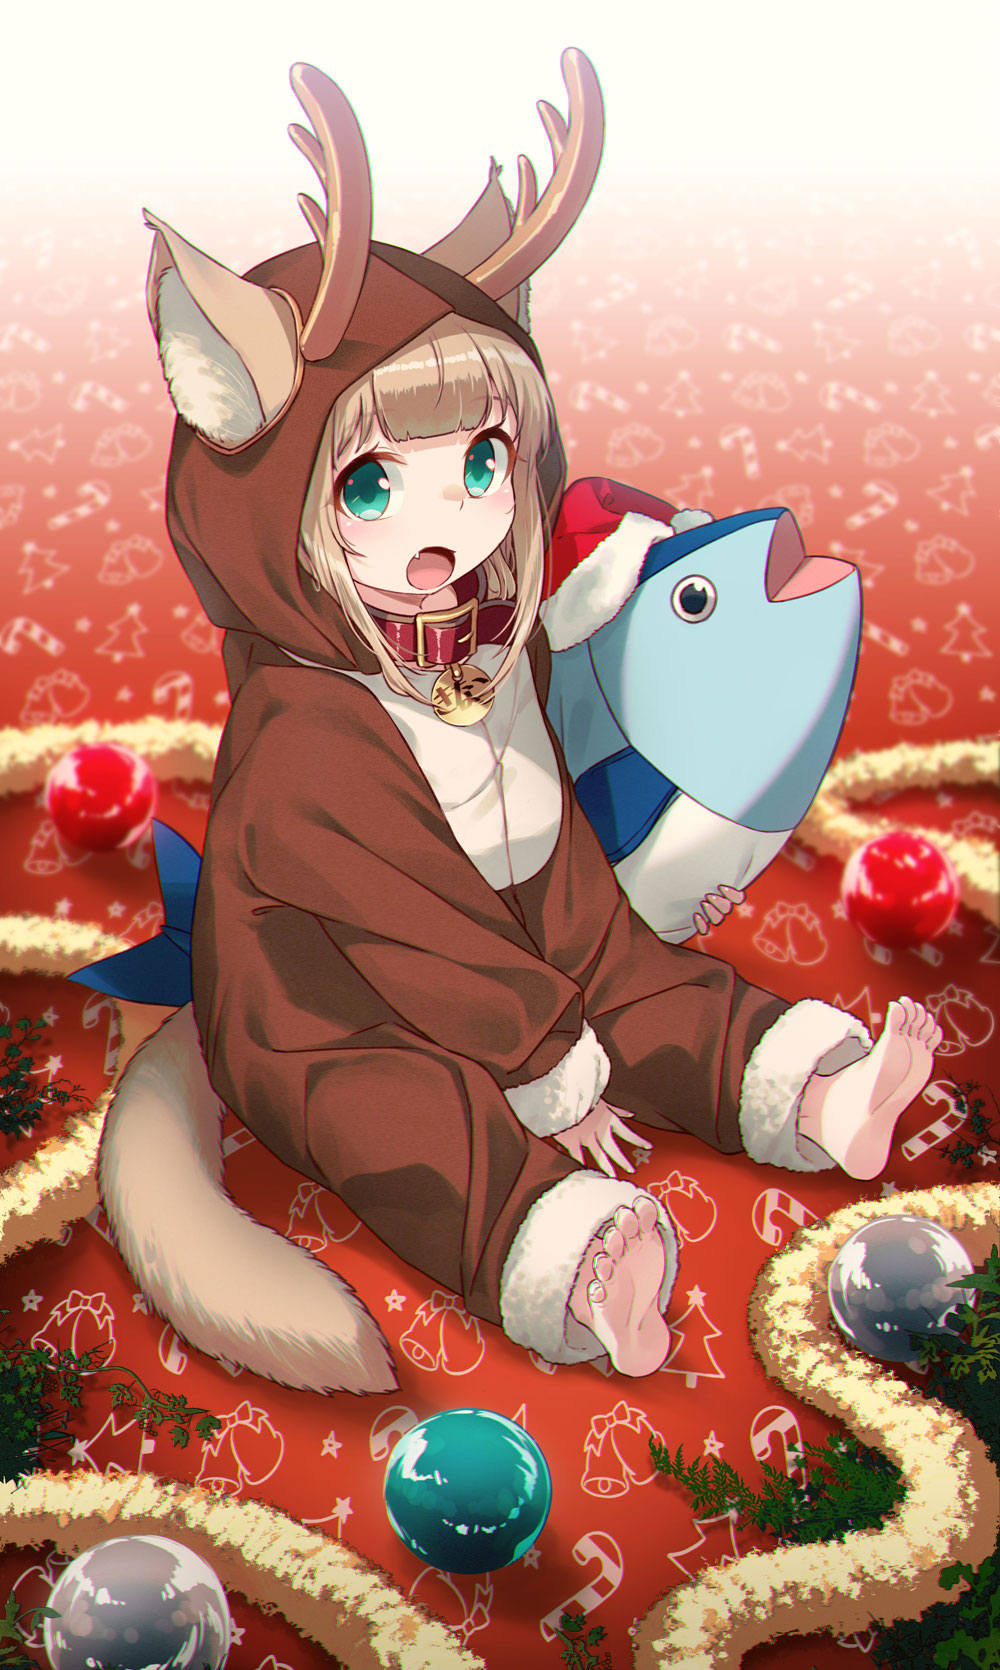 Anime 1000x1670 anime anime girls digital art artwork 2D portrait display 40hara cat girl loli Christmas Kinako